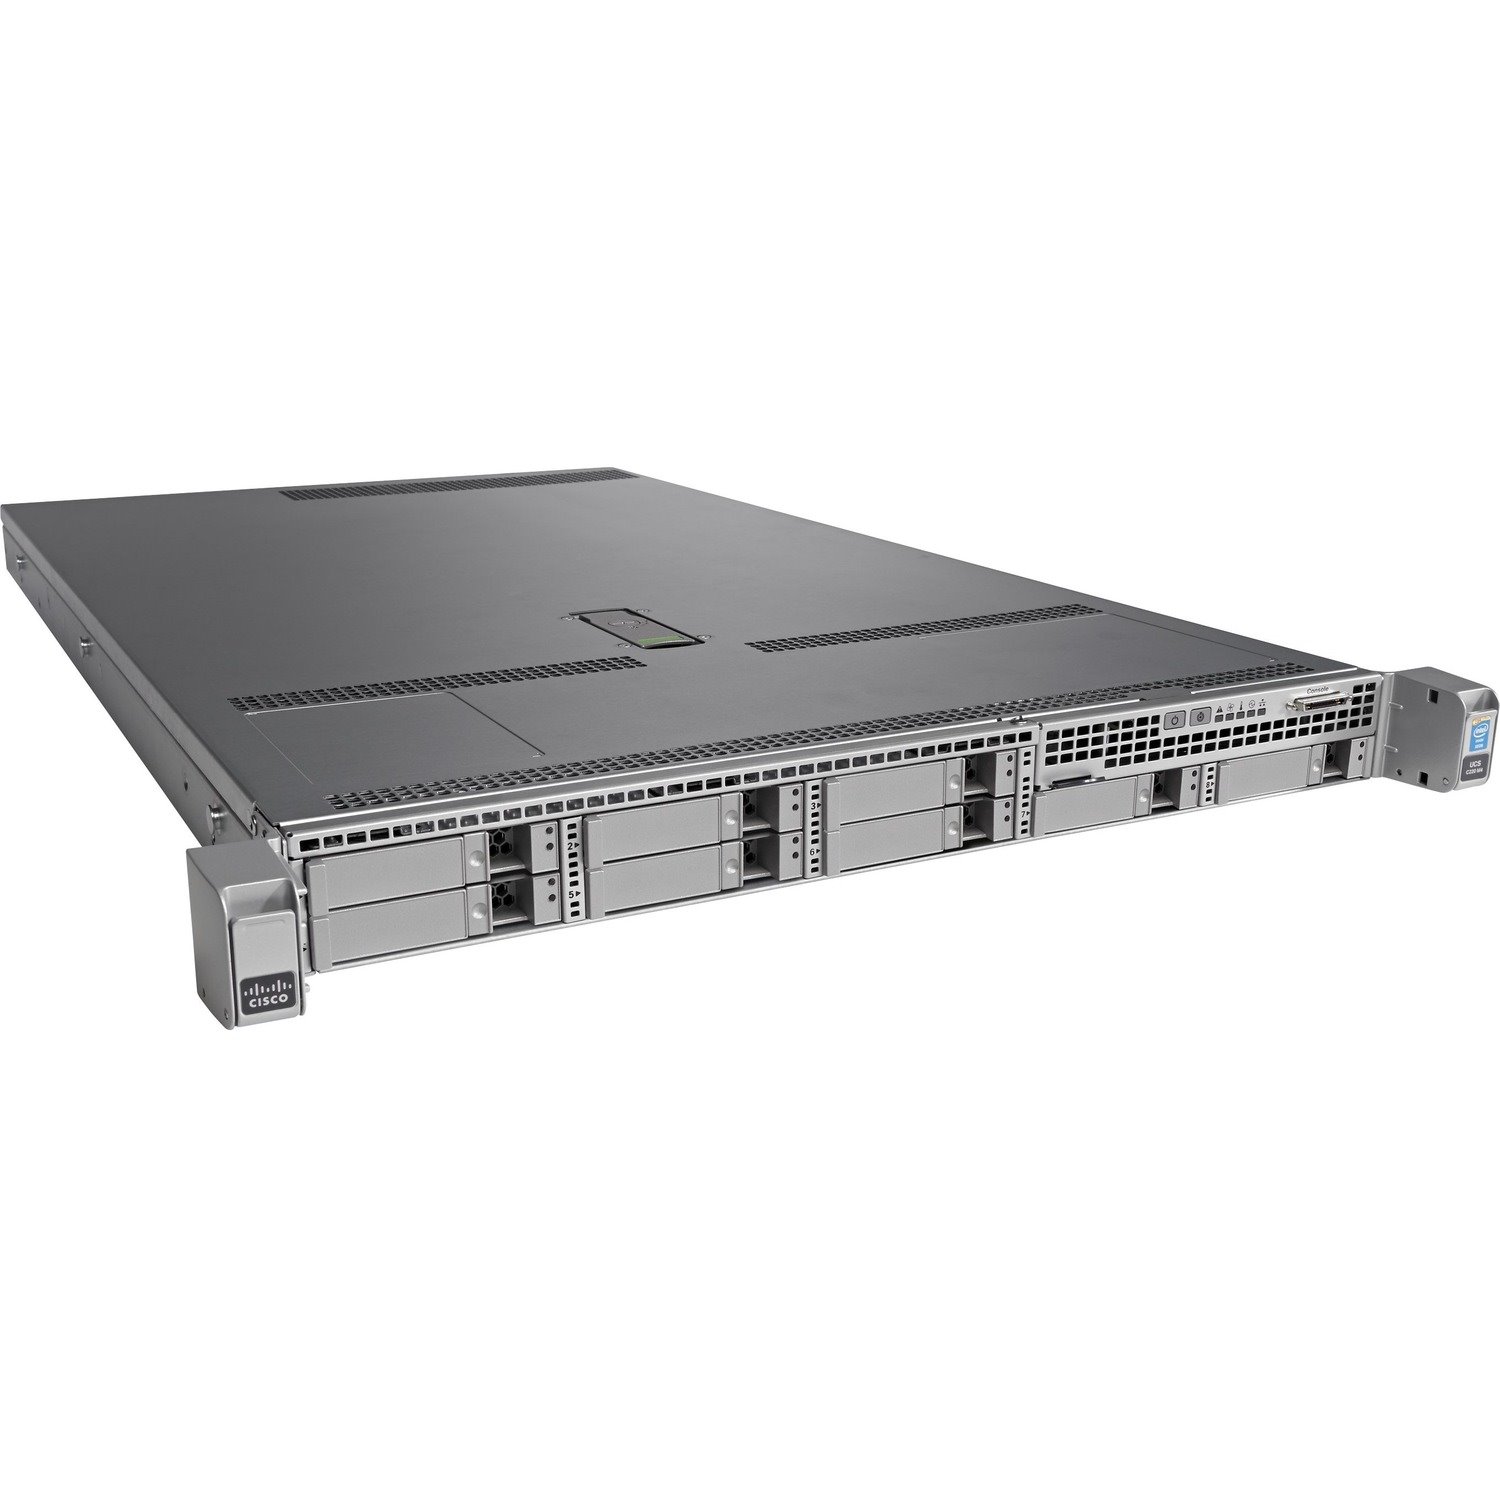 Cisco C220 M4 1U Rack Server - 1 x Intel Xeon E5-2620 v4 2.10 GHz - 16 GB RAM - 12Gb/s SAS Controller - Refurbished